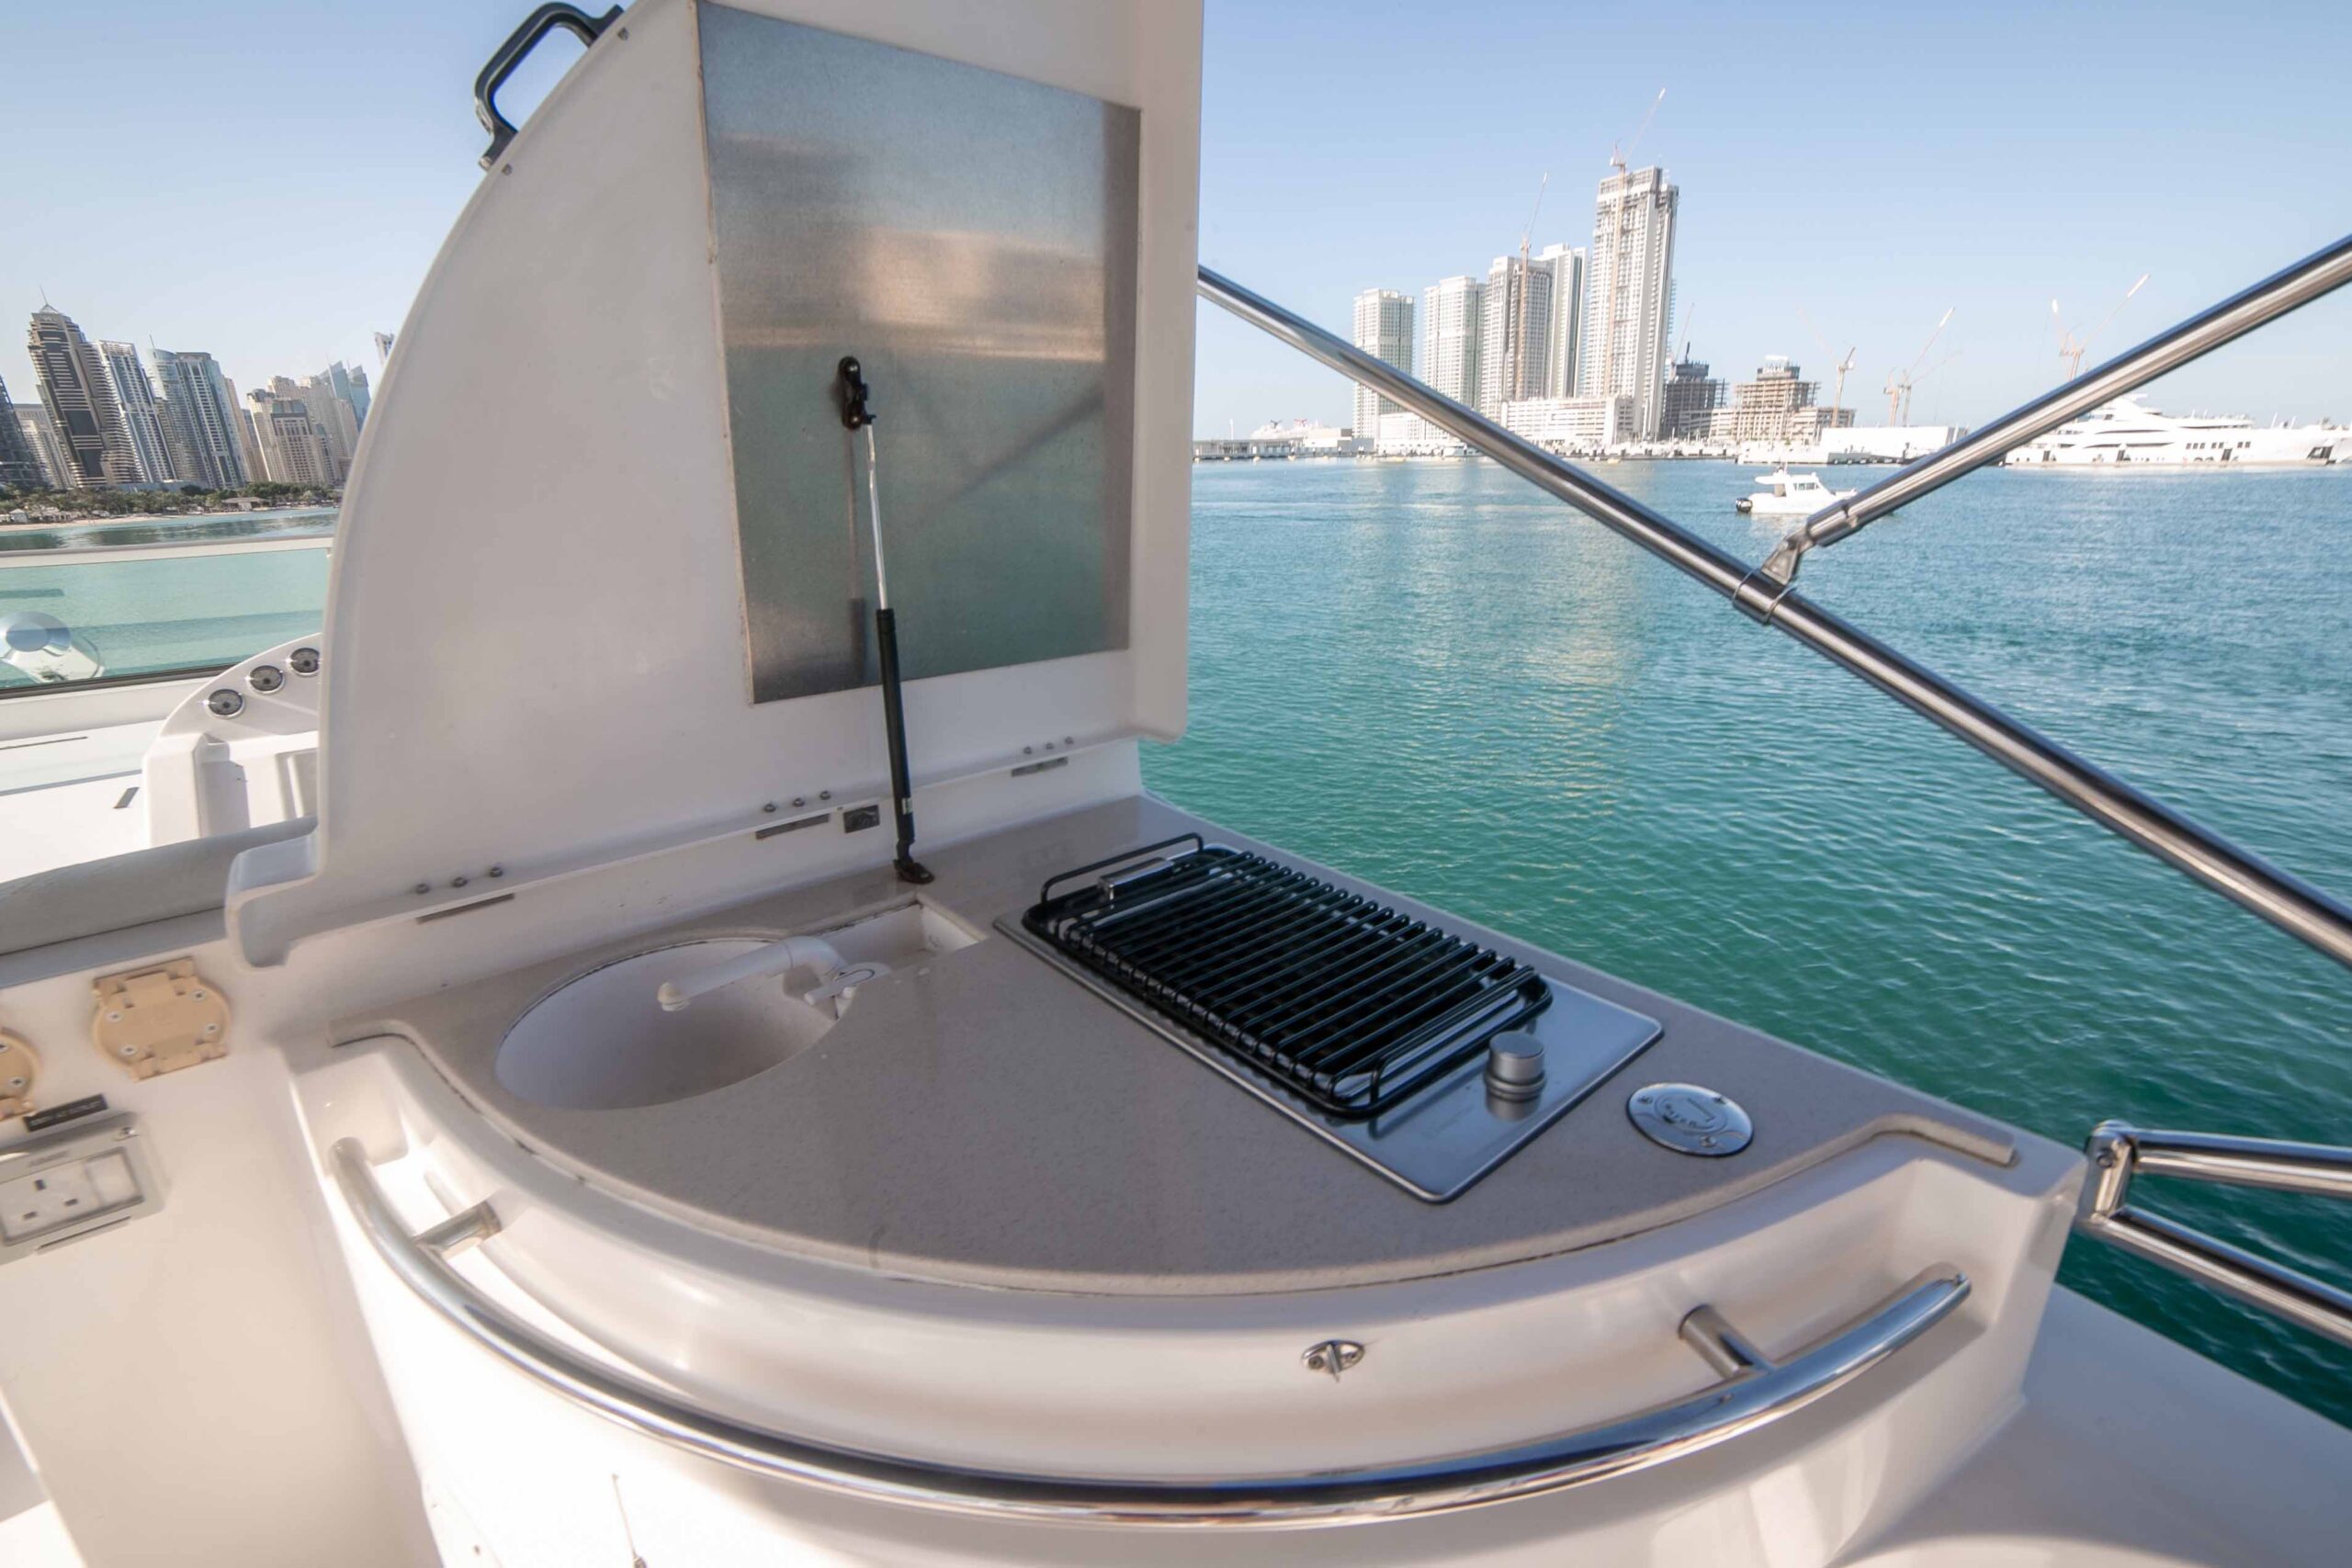 Explorer Goldeon Nightingale 55 ft. yacht with best price in Dubai